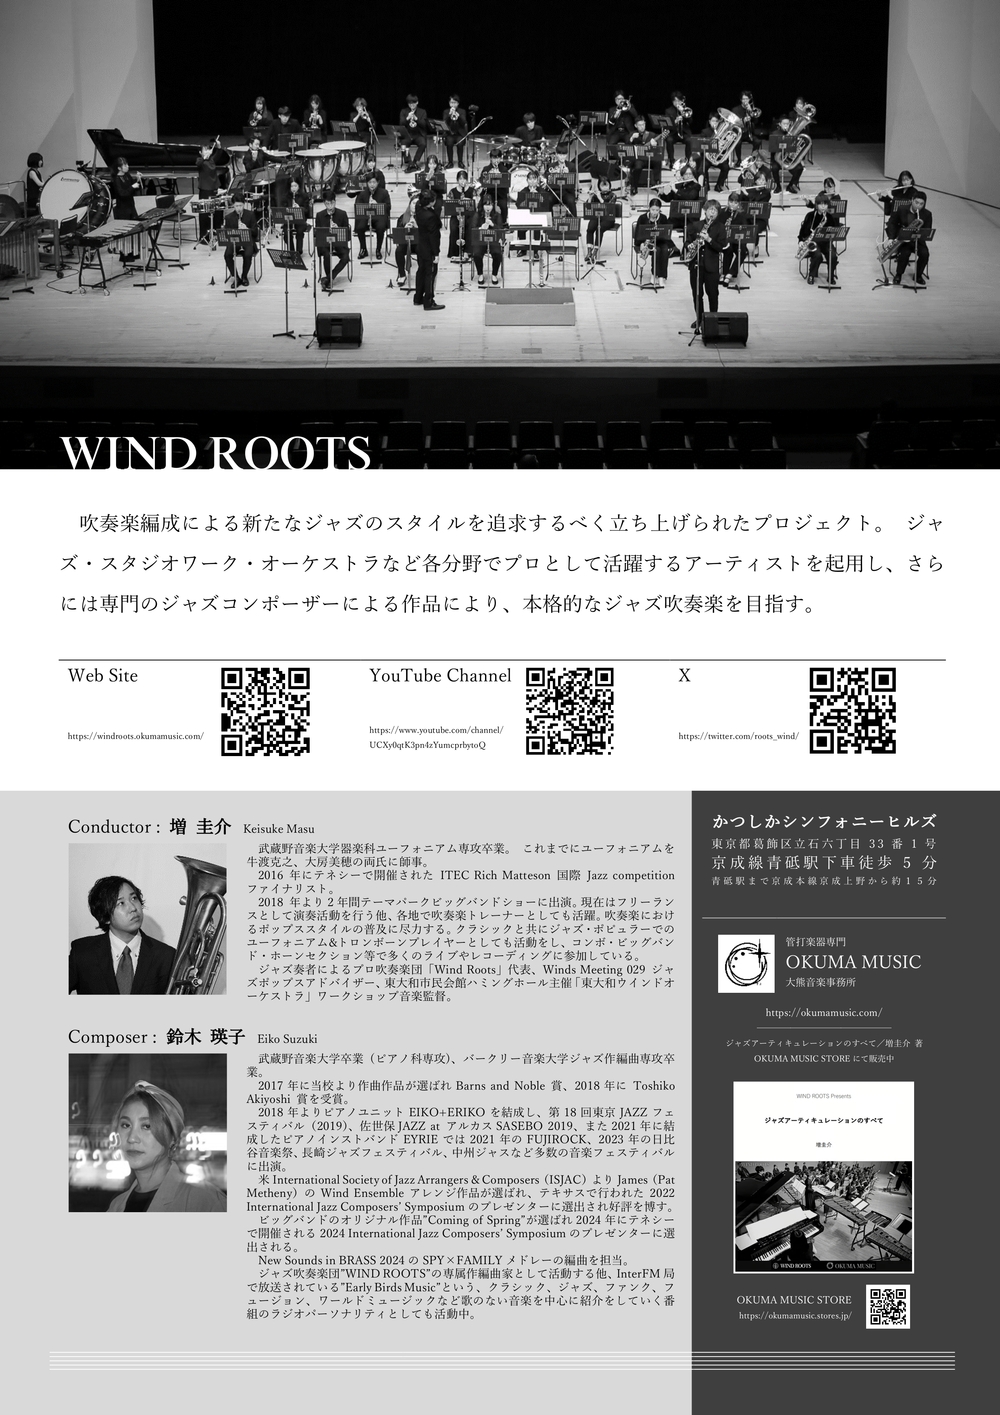 Wind Roots 2nd Regular Concert【Wind Roots】 | かつしかシンフォニーヒルズ モーツァルトホール